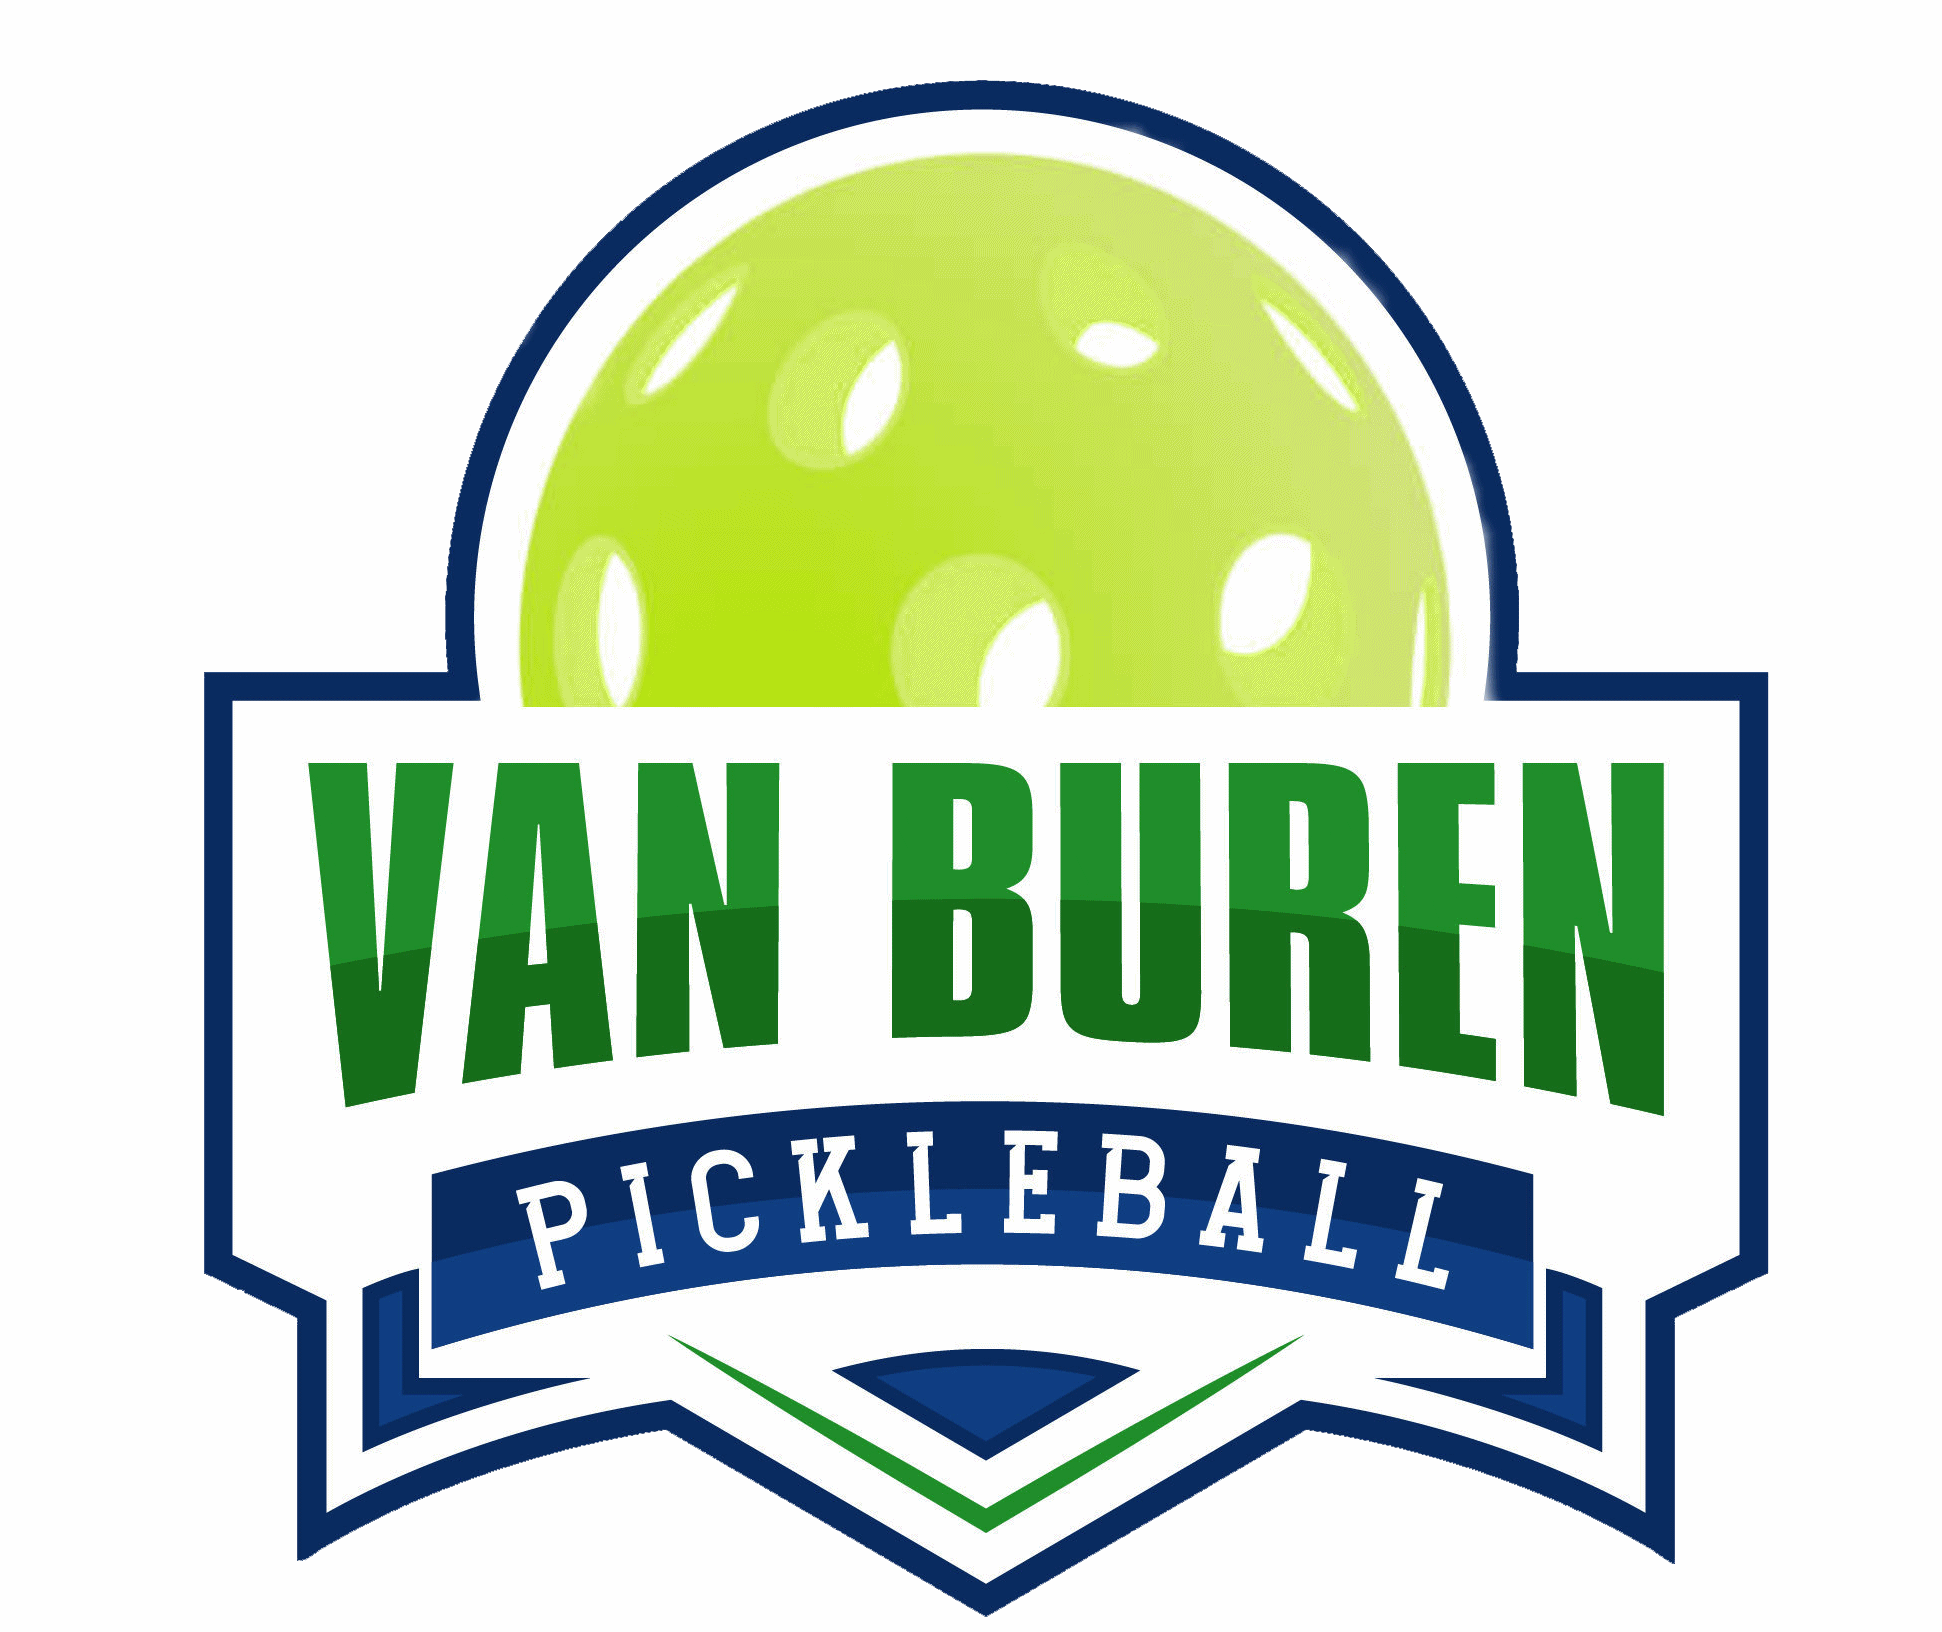 Van Buren Pickleball Logo 4